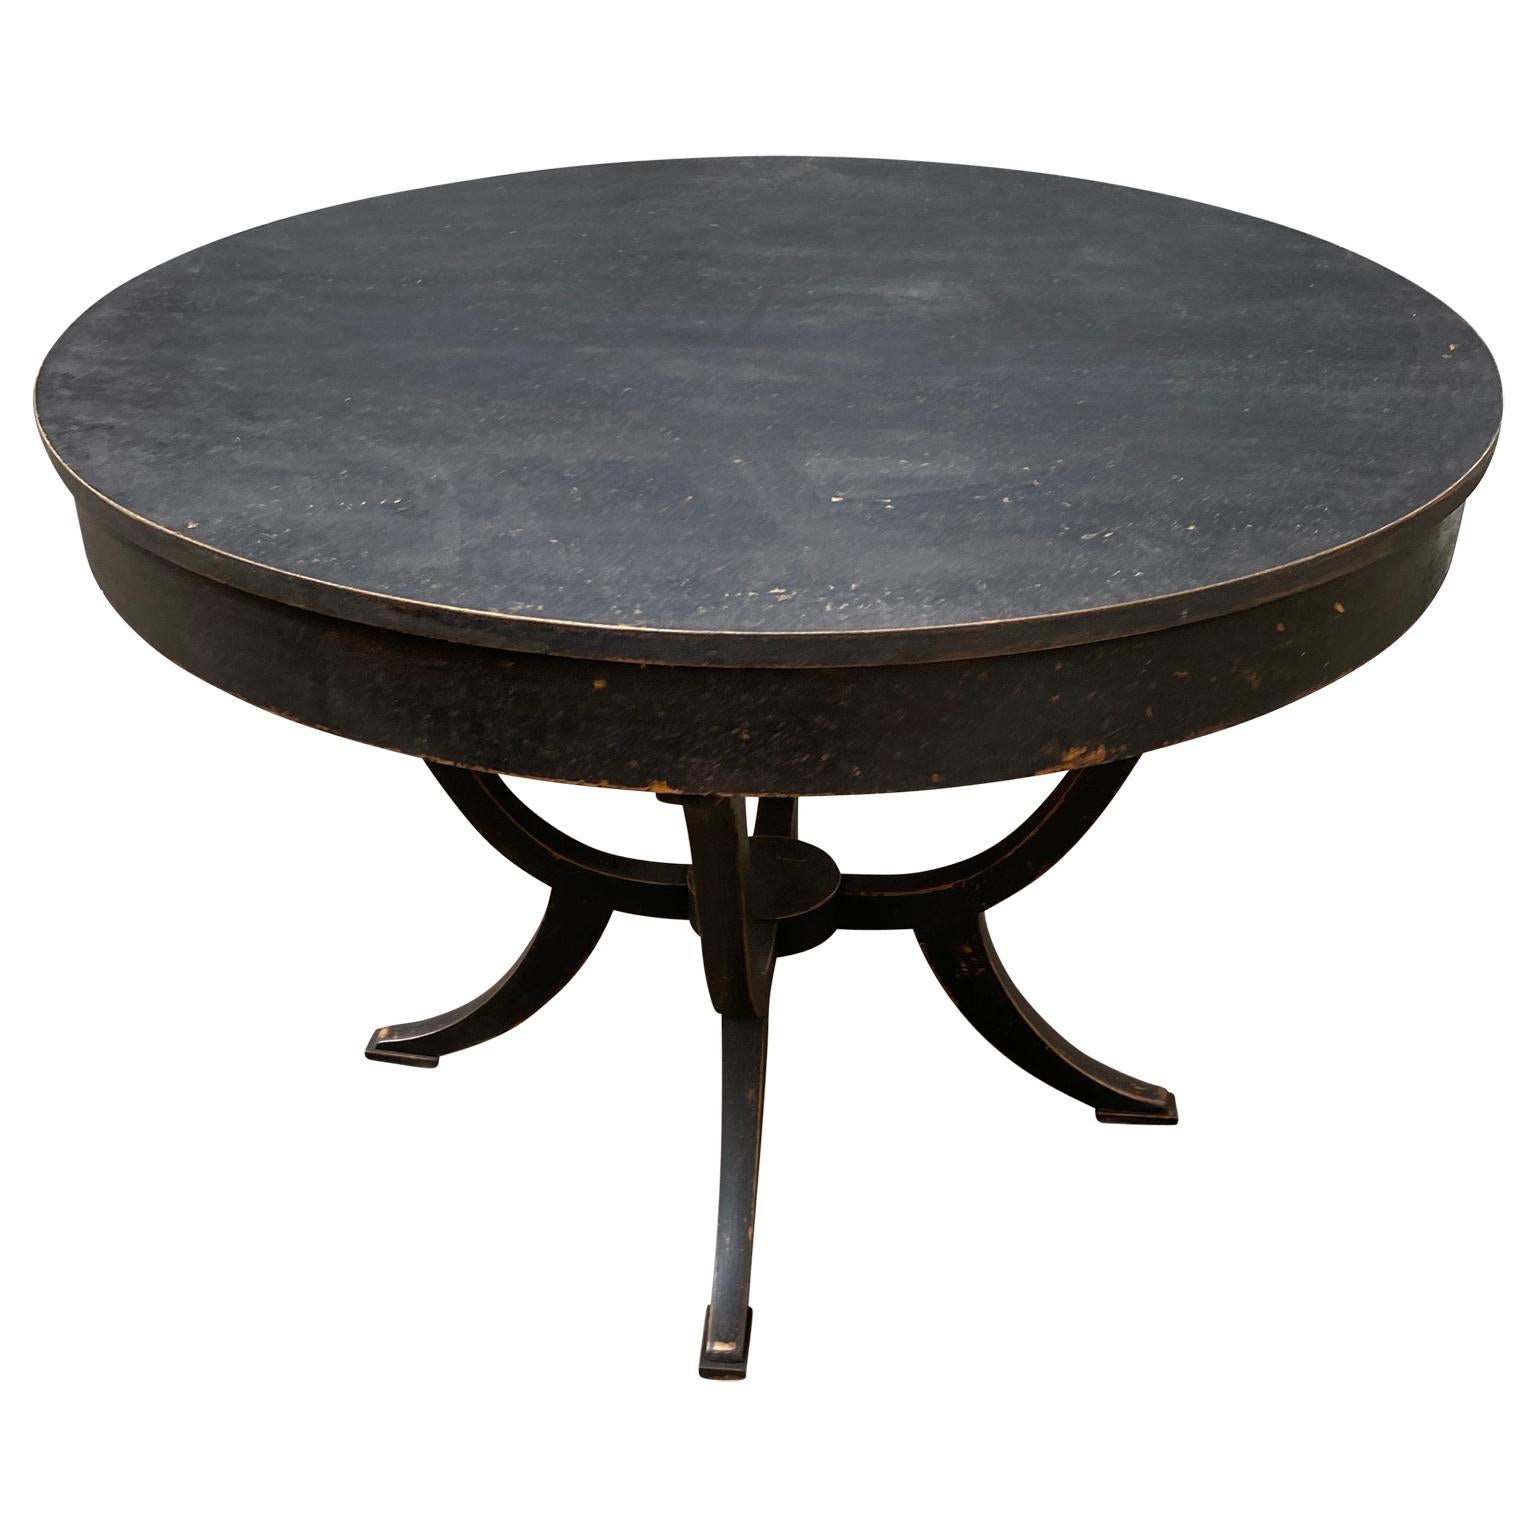 Hand-Painted Oval Swedish Black Painted Biedermeier Style Table